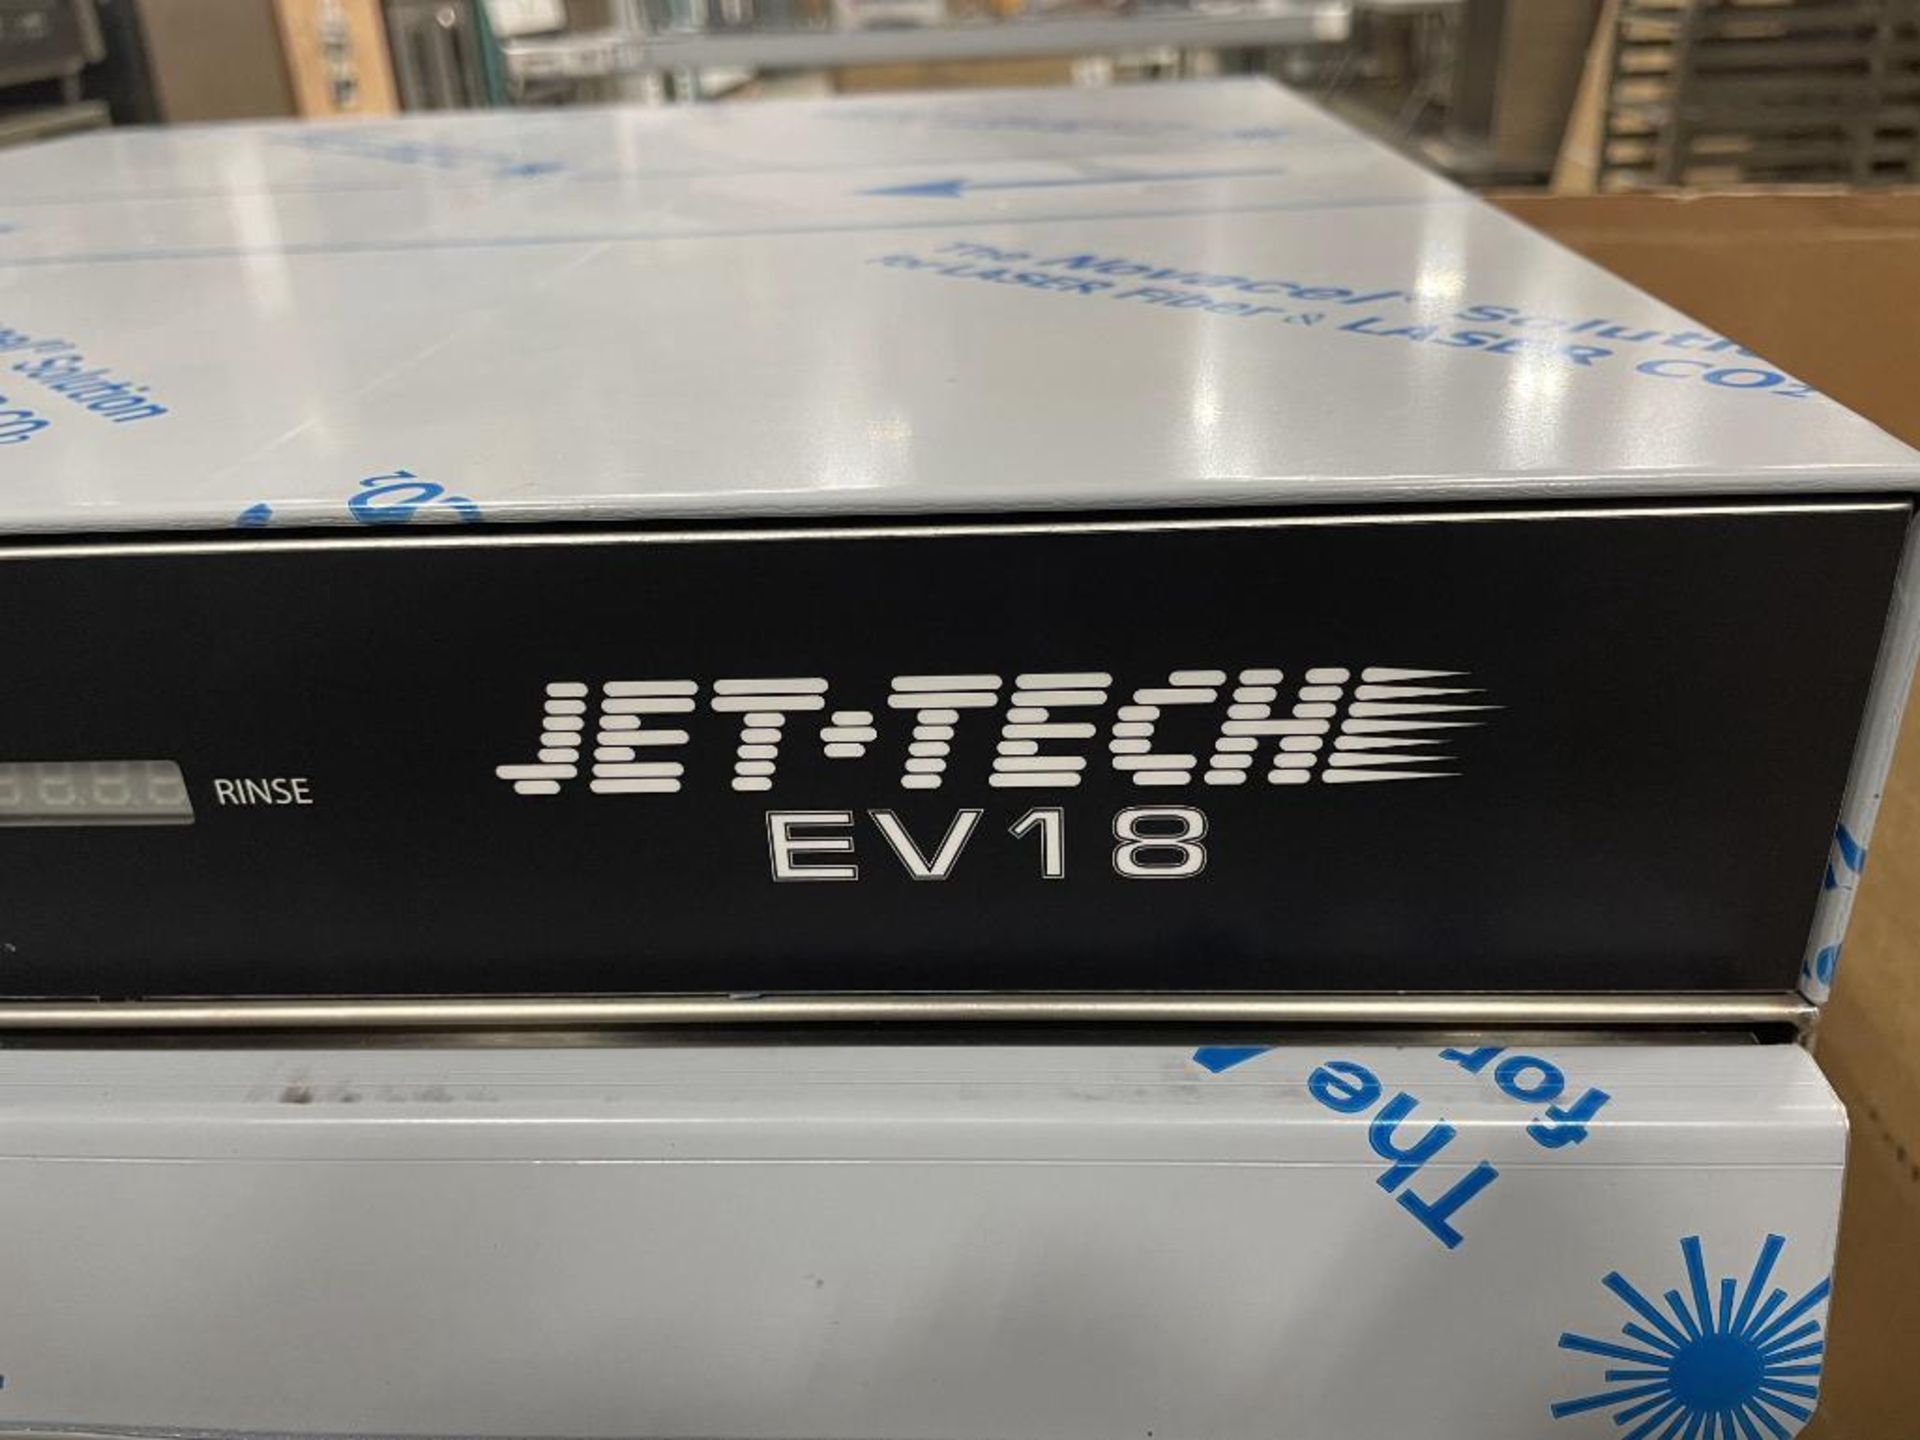 NEW JET-TECH EV-18 HIGH-TEMP UNDERCOUNTER DISHWASHER - Image 6 of 13